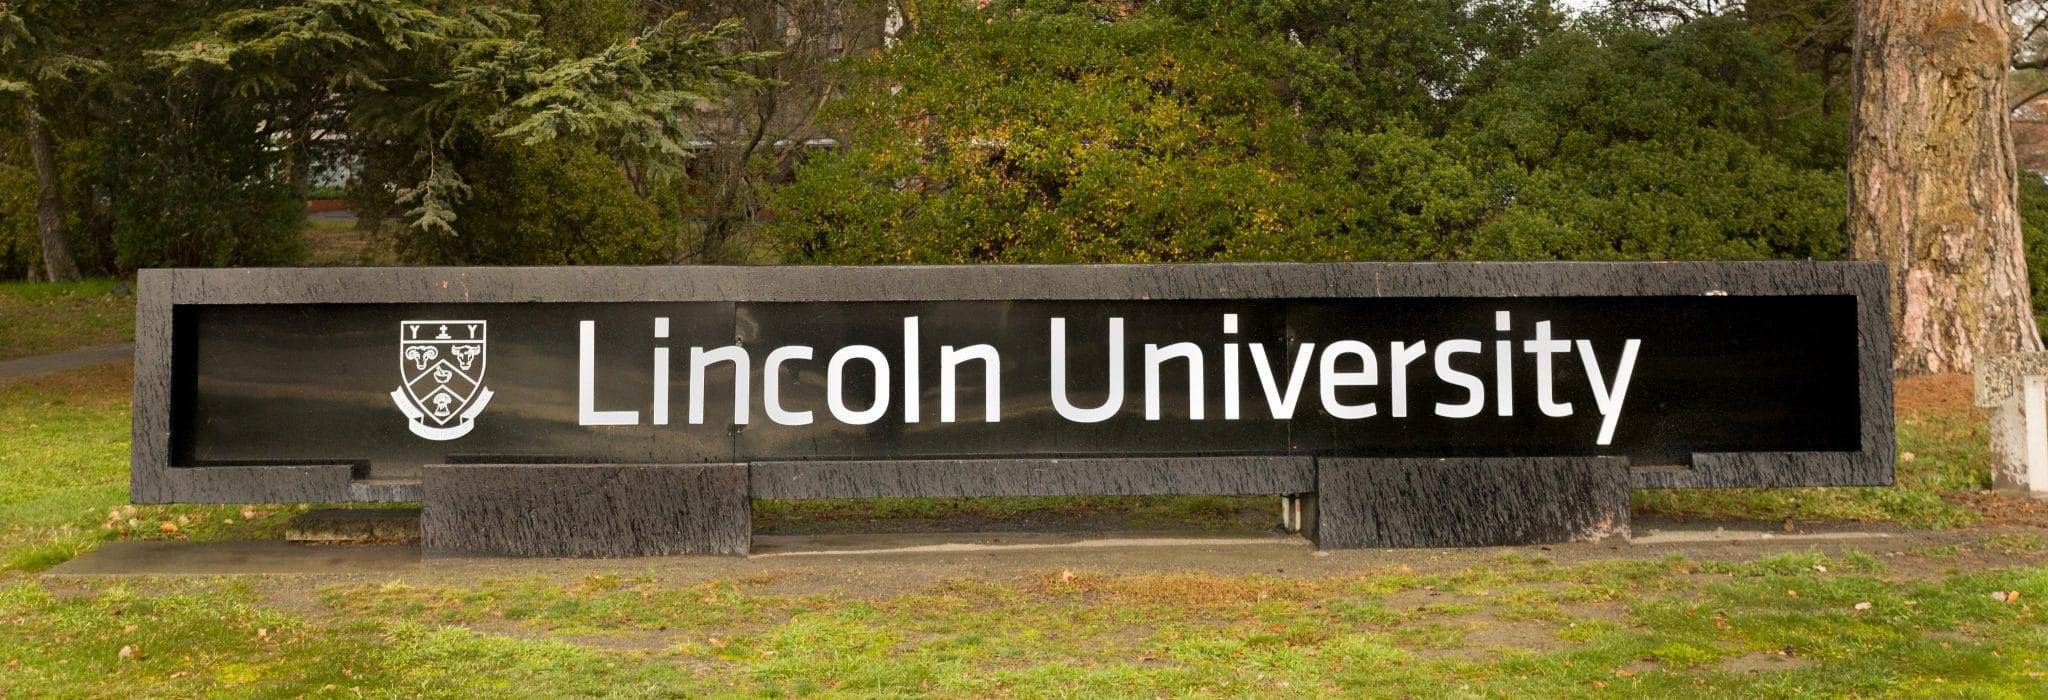 Prendos Lincoln University Case Study Banner